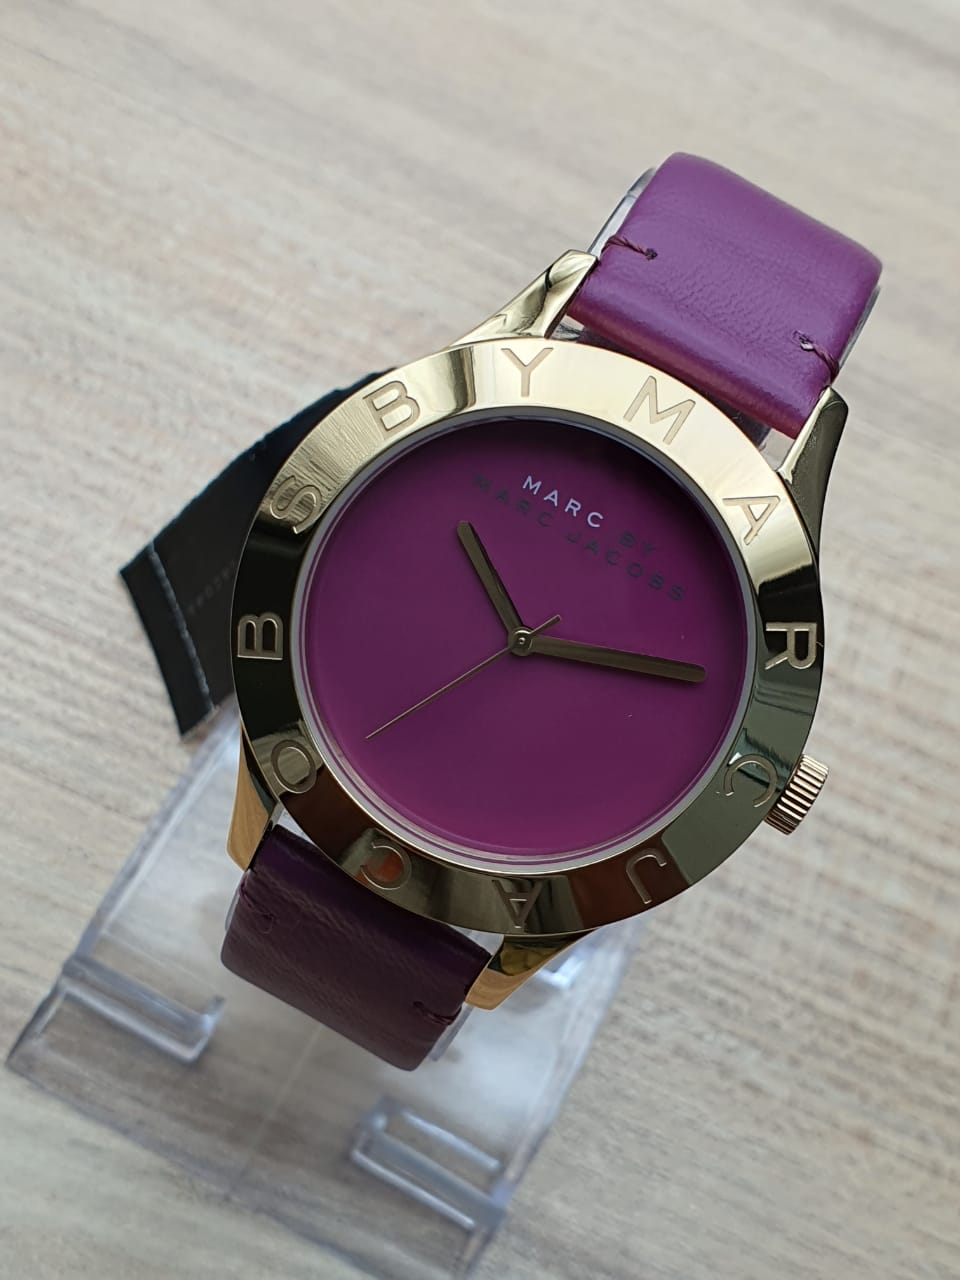 Marc Jacobs Purple Dial Purple Leather Strap Watch for Women - MBM1209